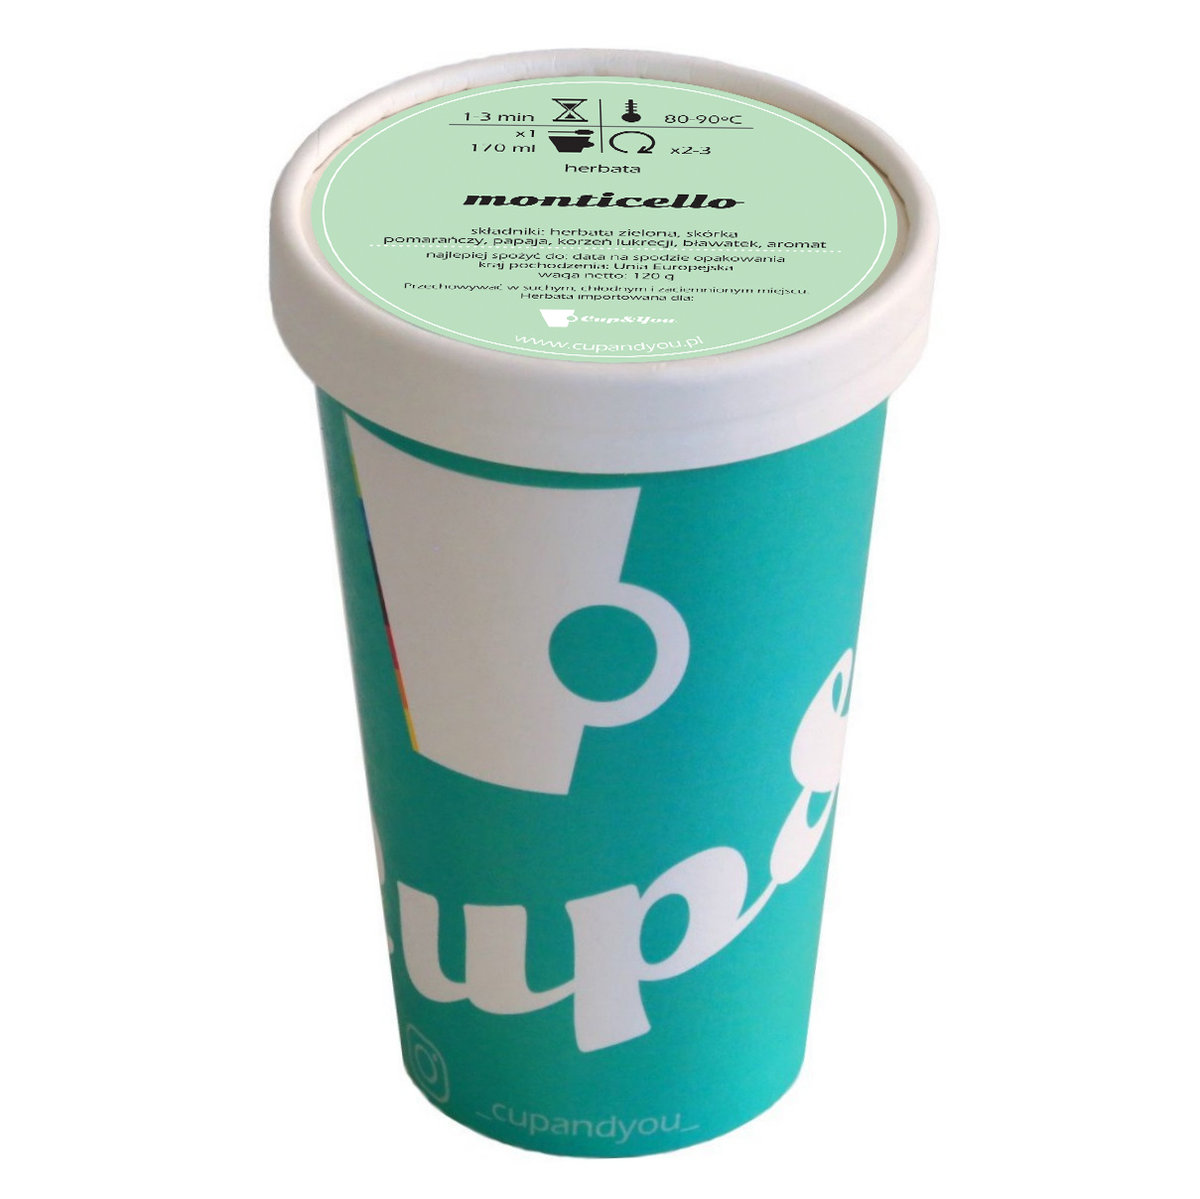 Herbata zielona smakowa CUP&YOU, monticello w EKO KUBKU, 120 g